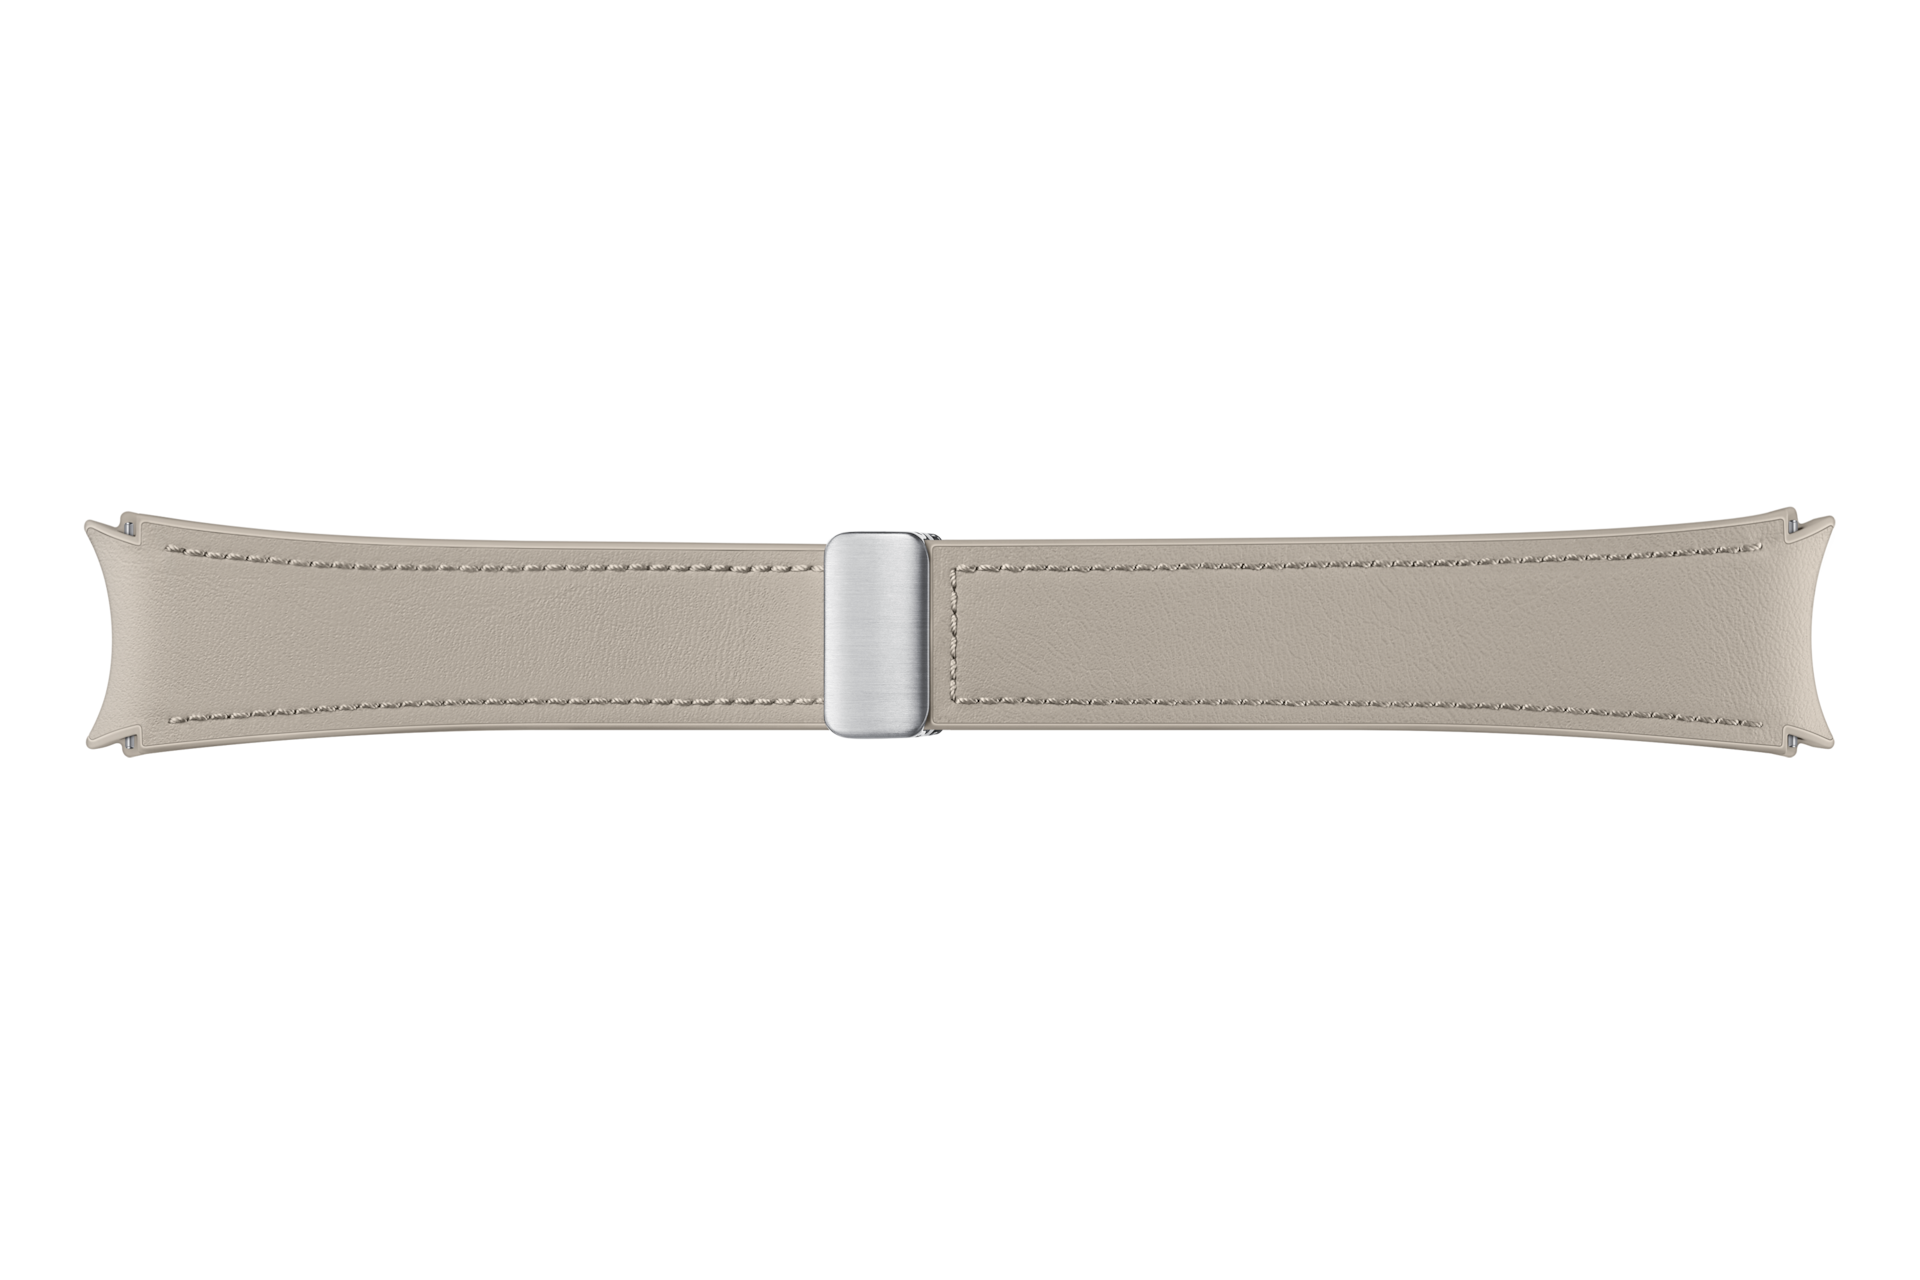 Correa D-Buckle flor gris Samsung Galaxy Watch 6 Classic 47mm 